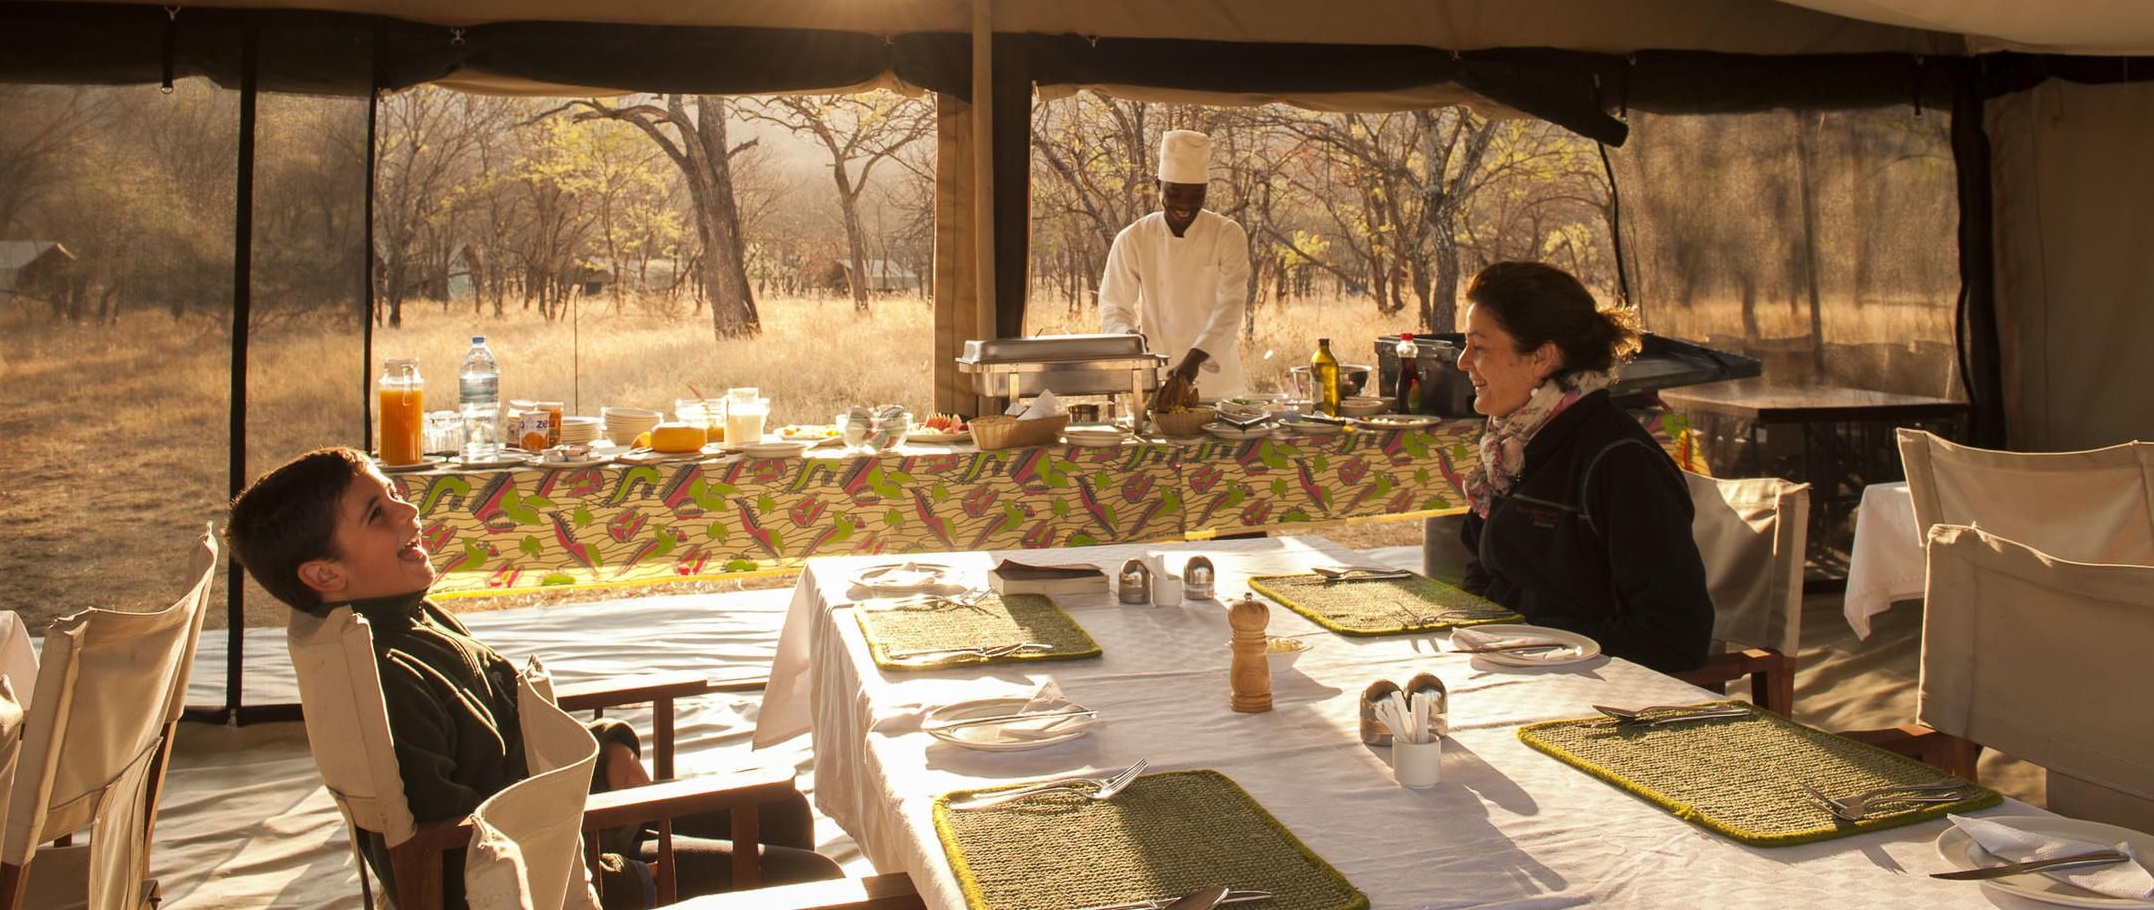 Serengeti Ndutu Kati Kati Tented Camp Speisezelt 